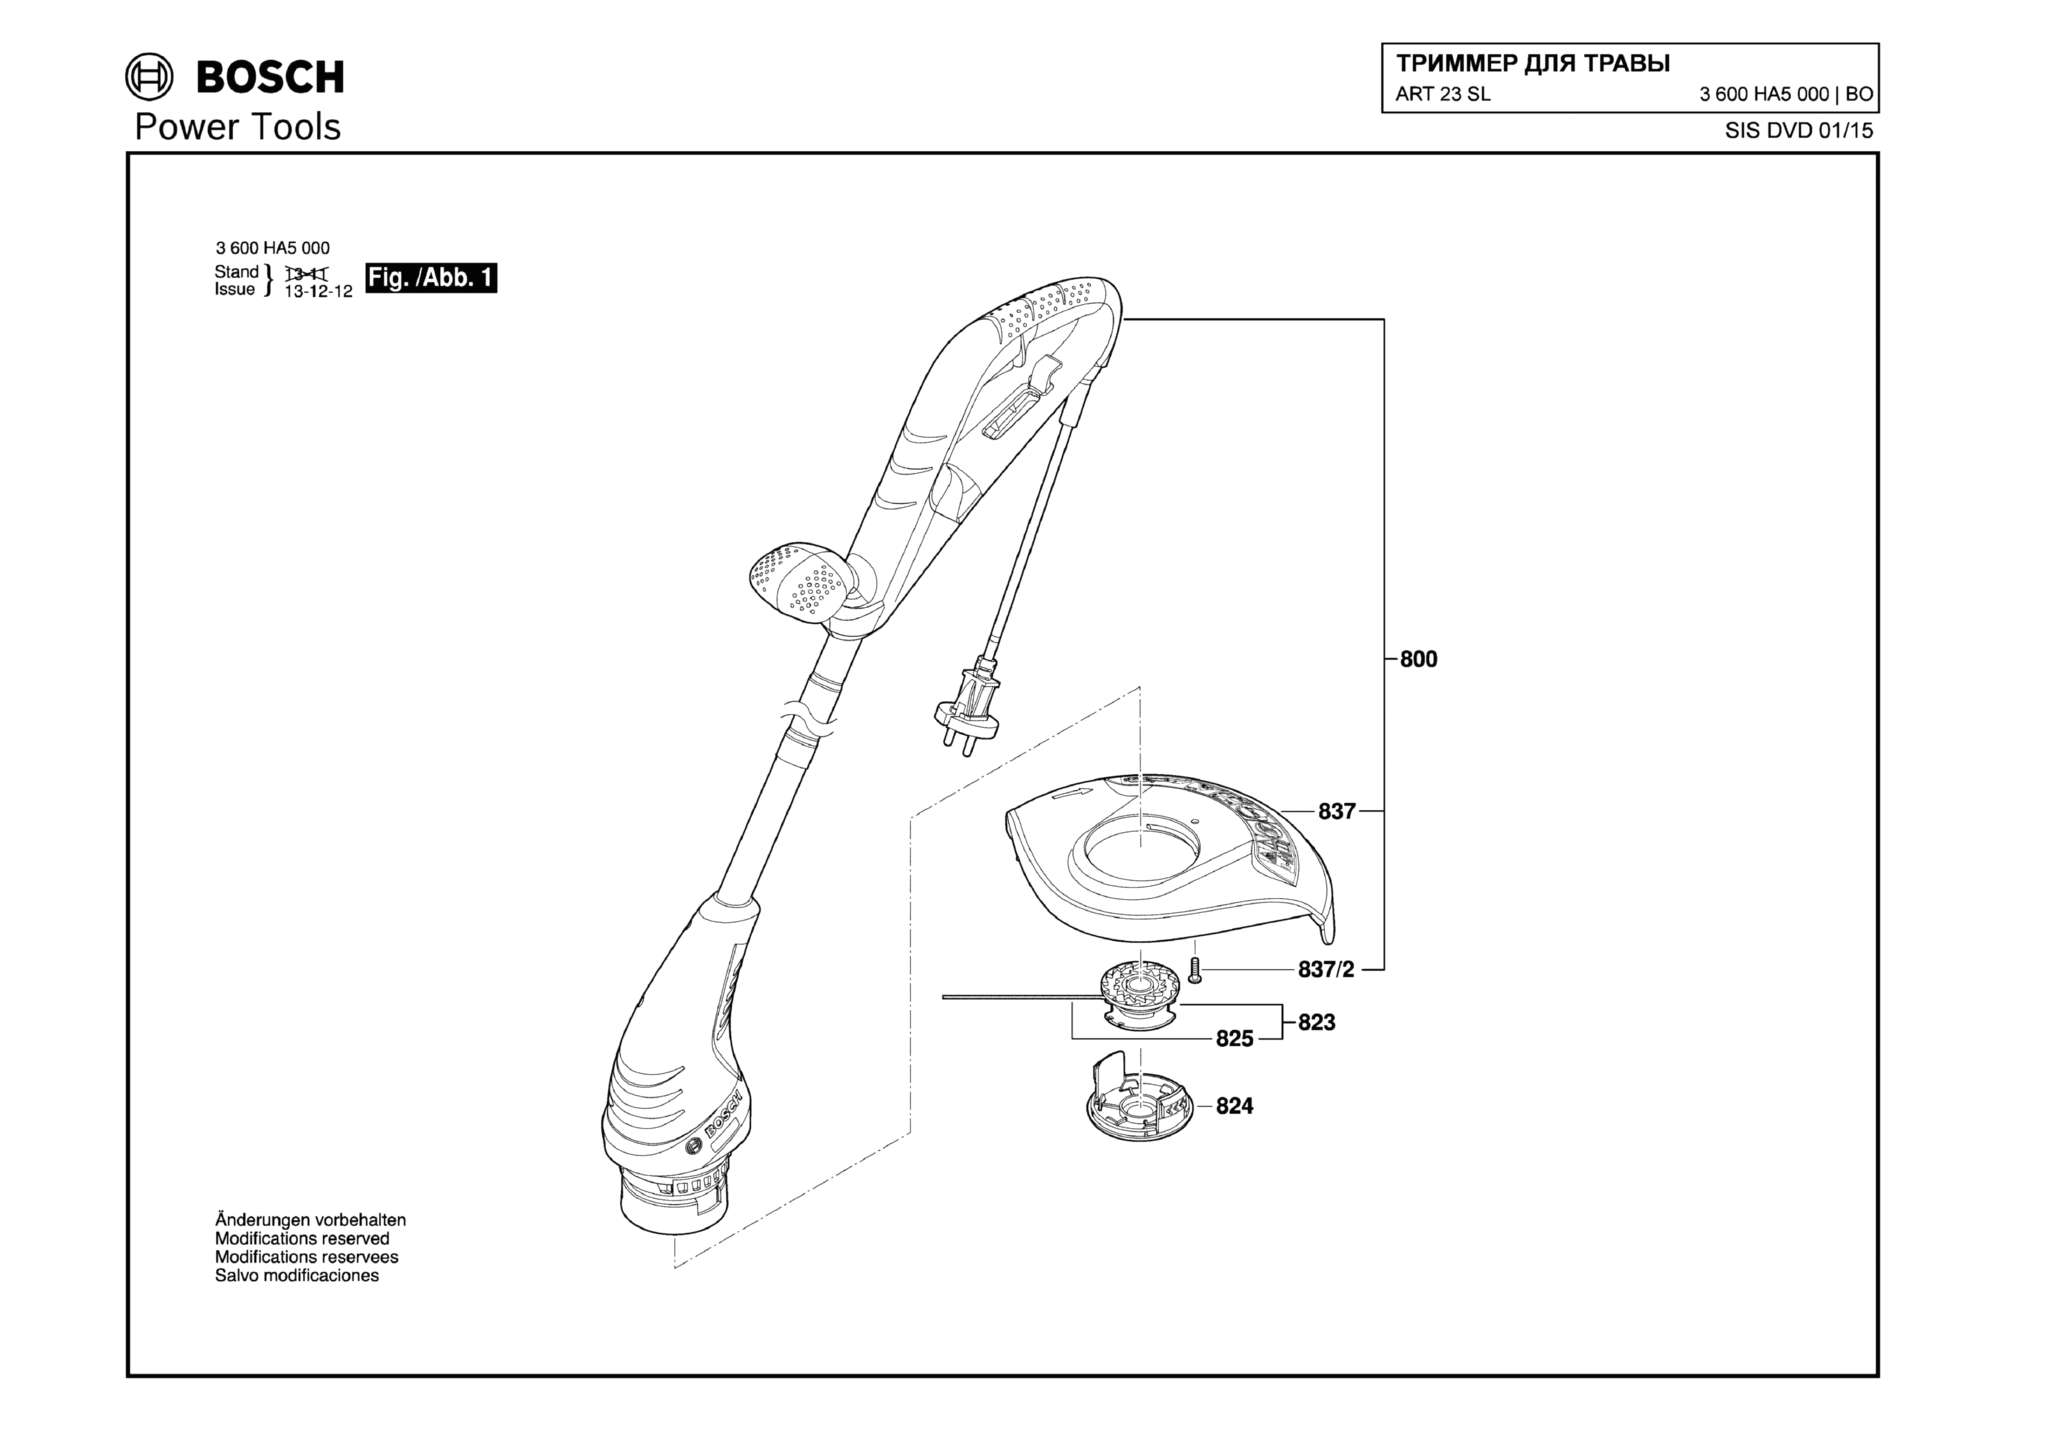 Запчасти, схема и деталировка Bosch ART 23 SL (ТИП 3600HA5000)